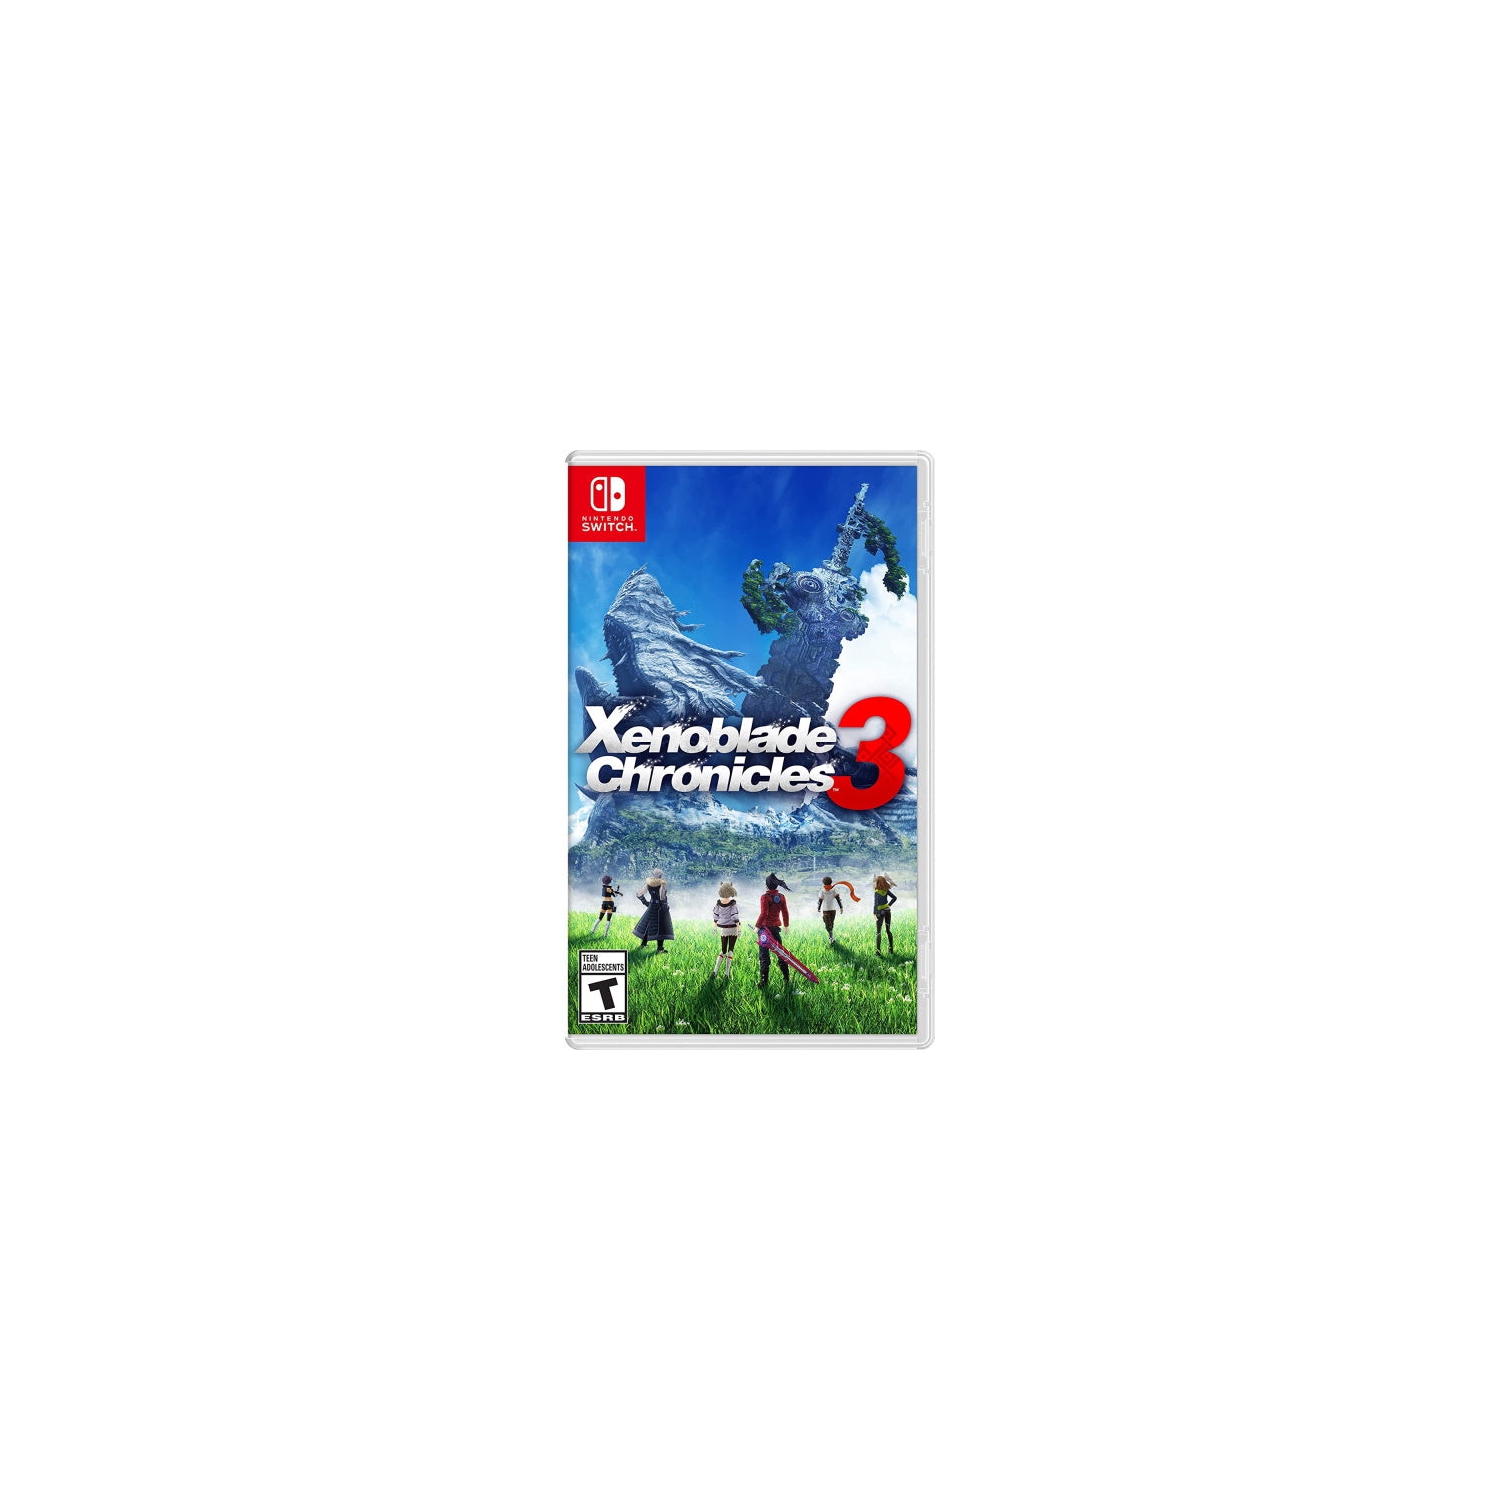 Xenoblade Chronicles 3 [Nintendo Switch]